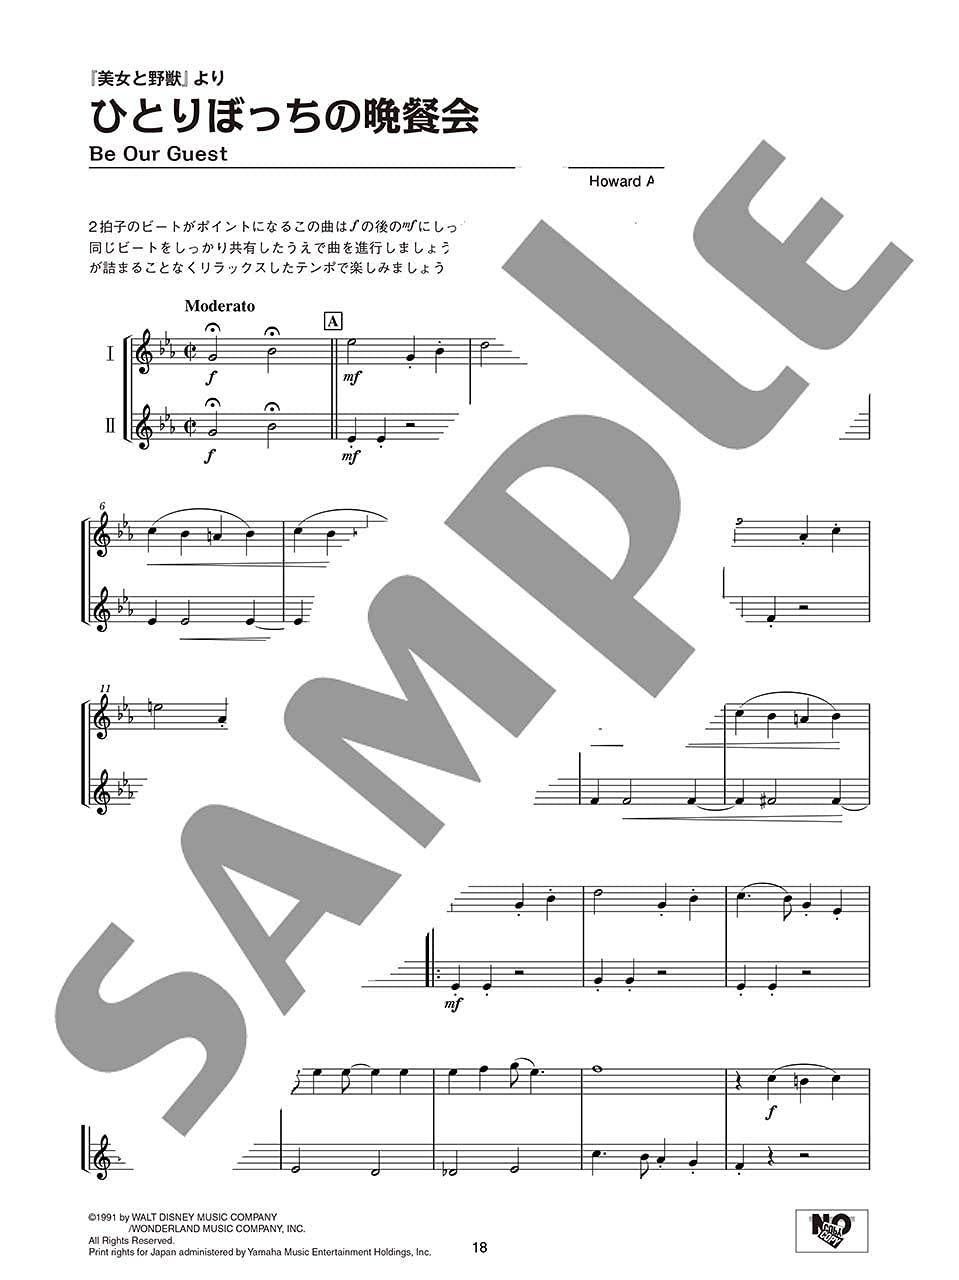 Ensemble de Disney: Horn Ensemble(Pre-Intermediate) Sheet Music Book